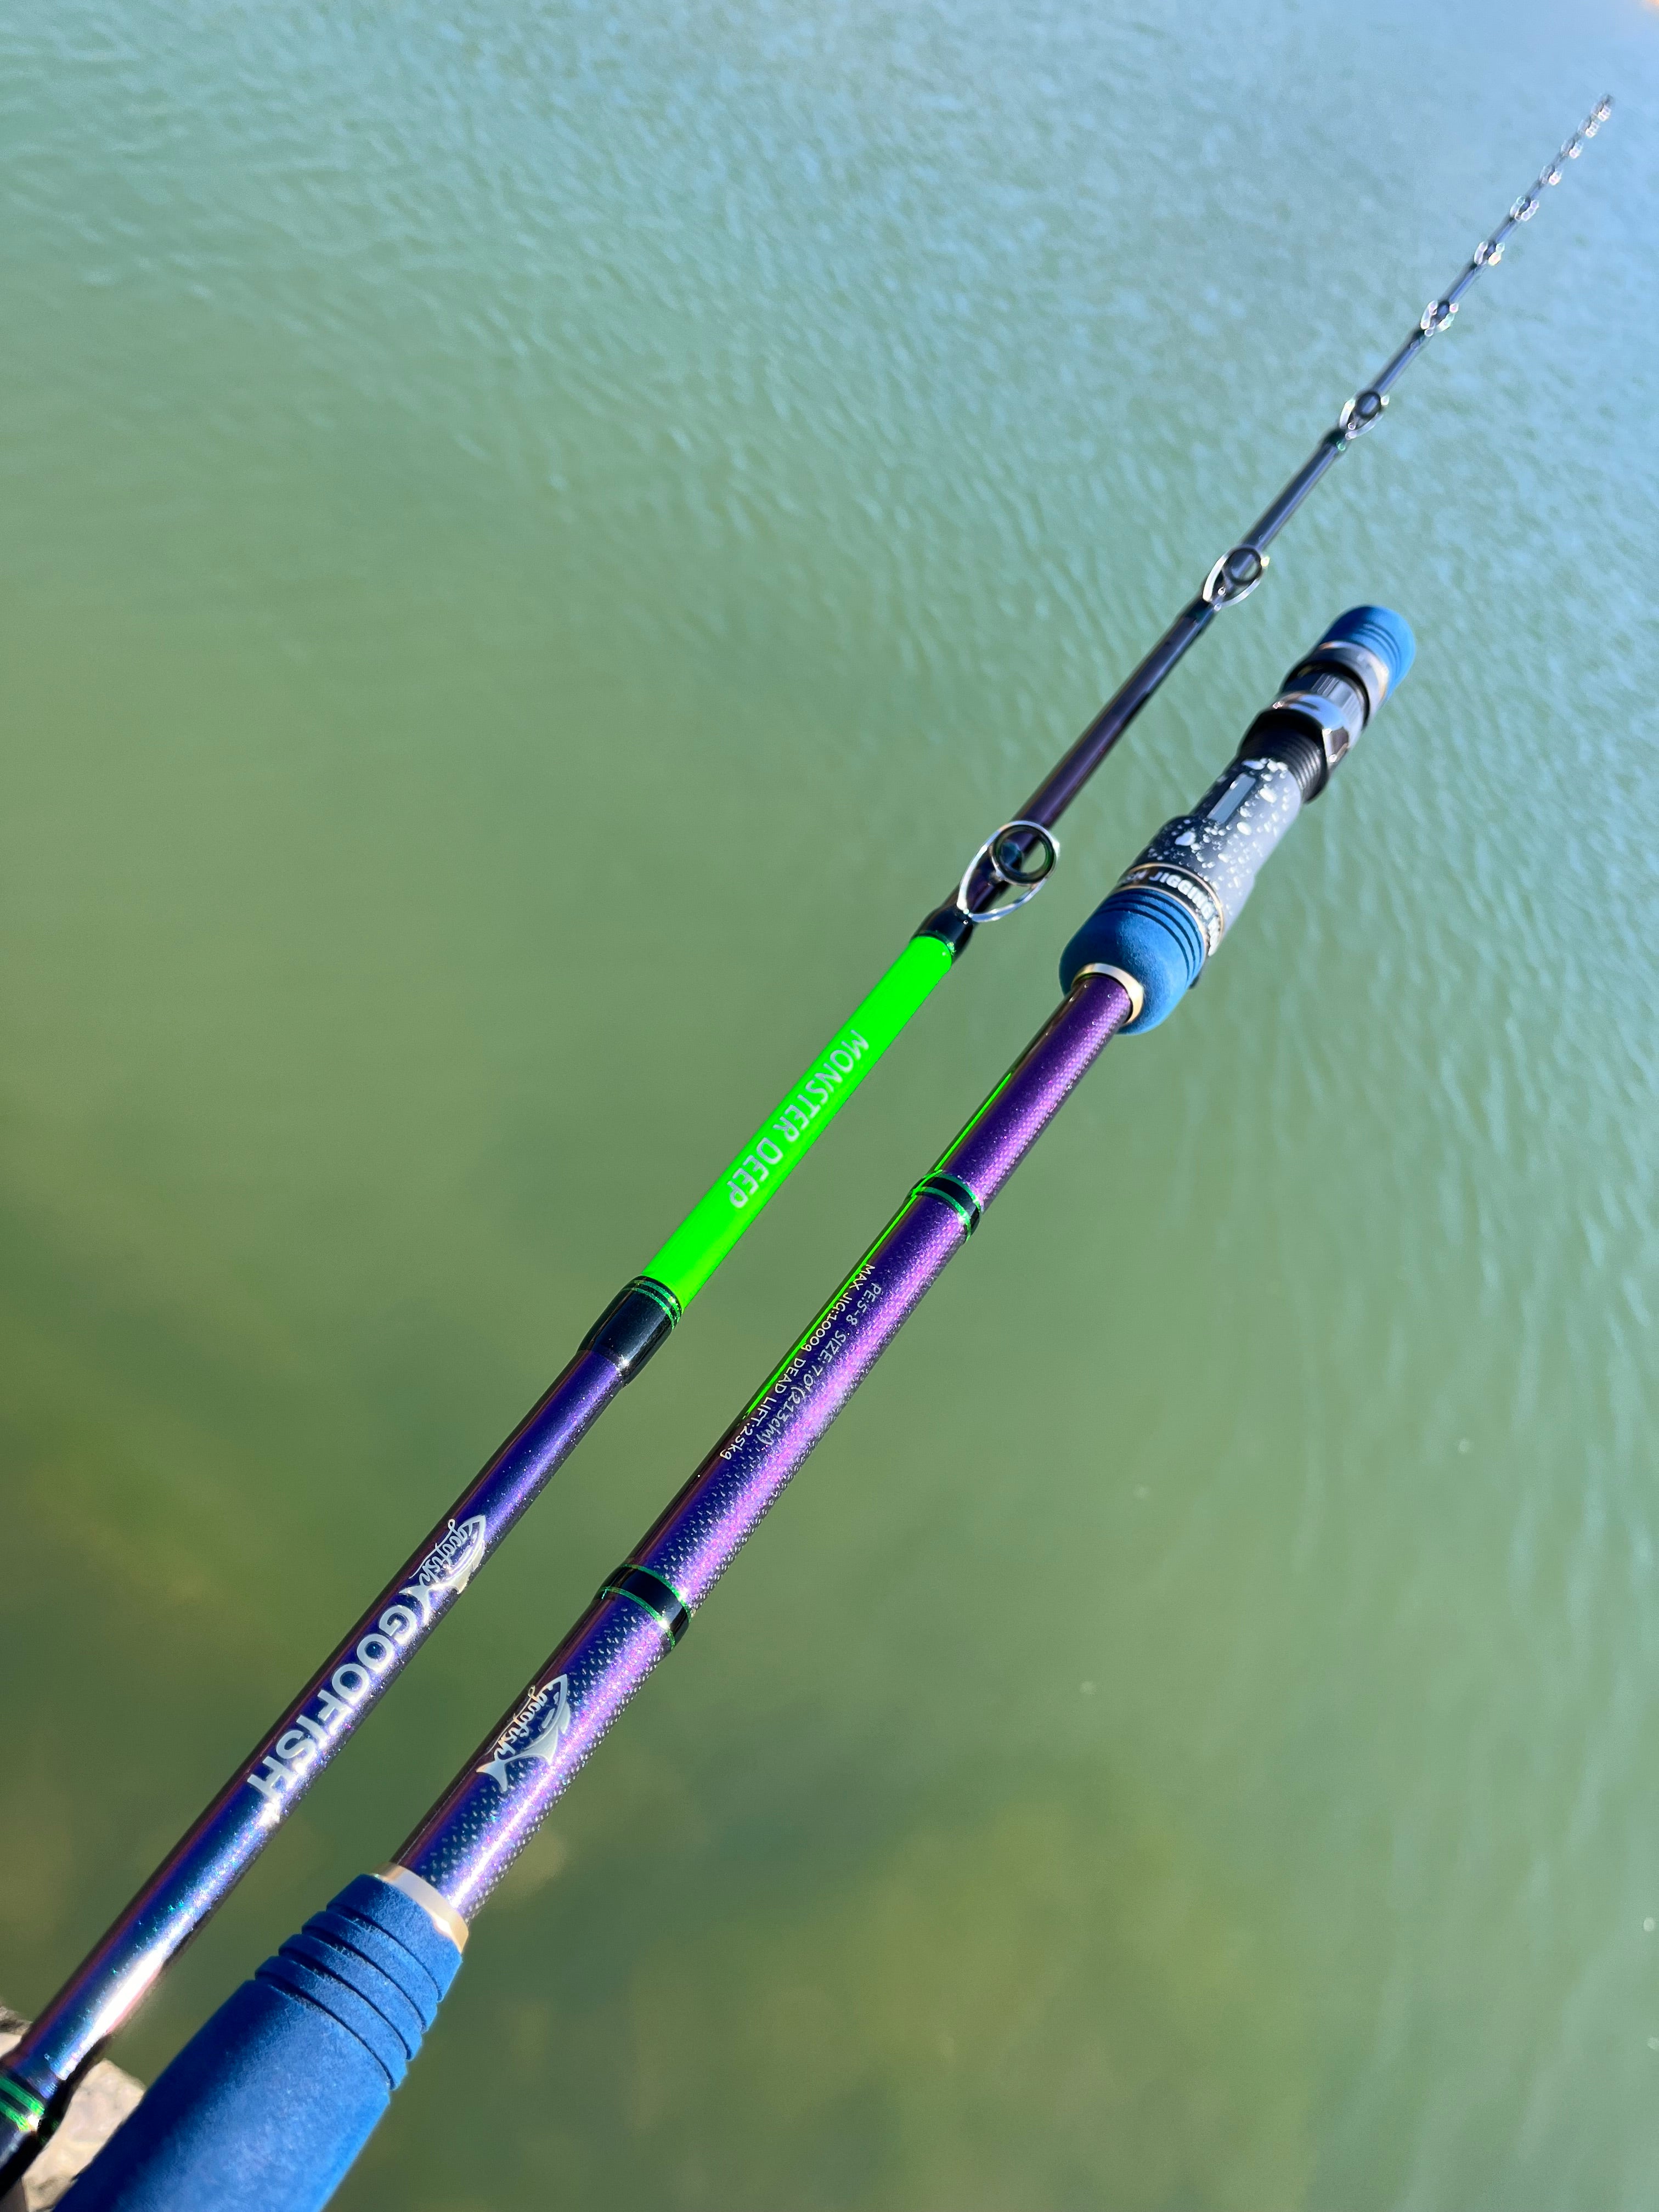 fishing rod handles - Google Search